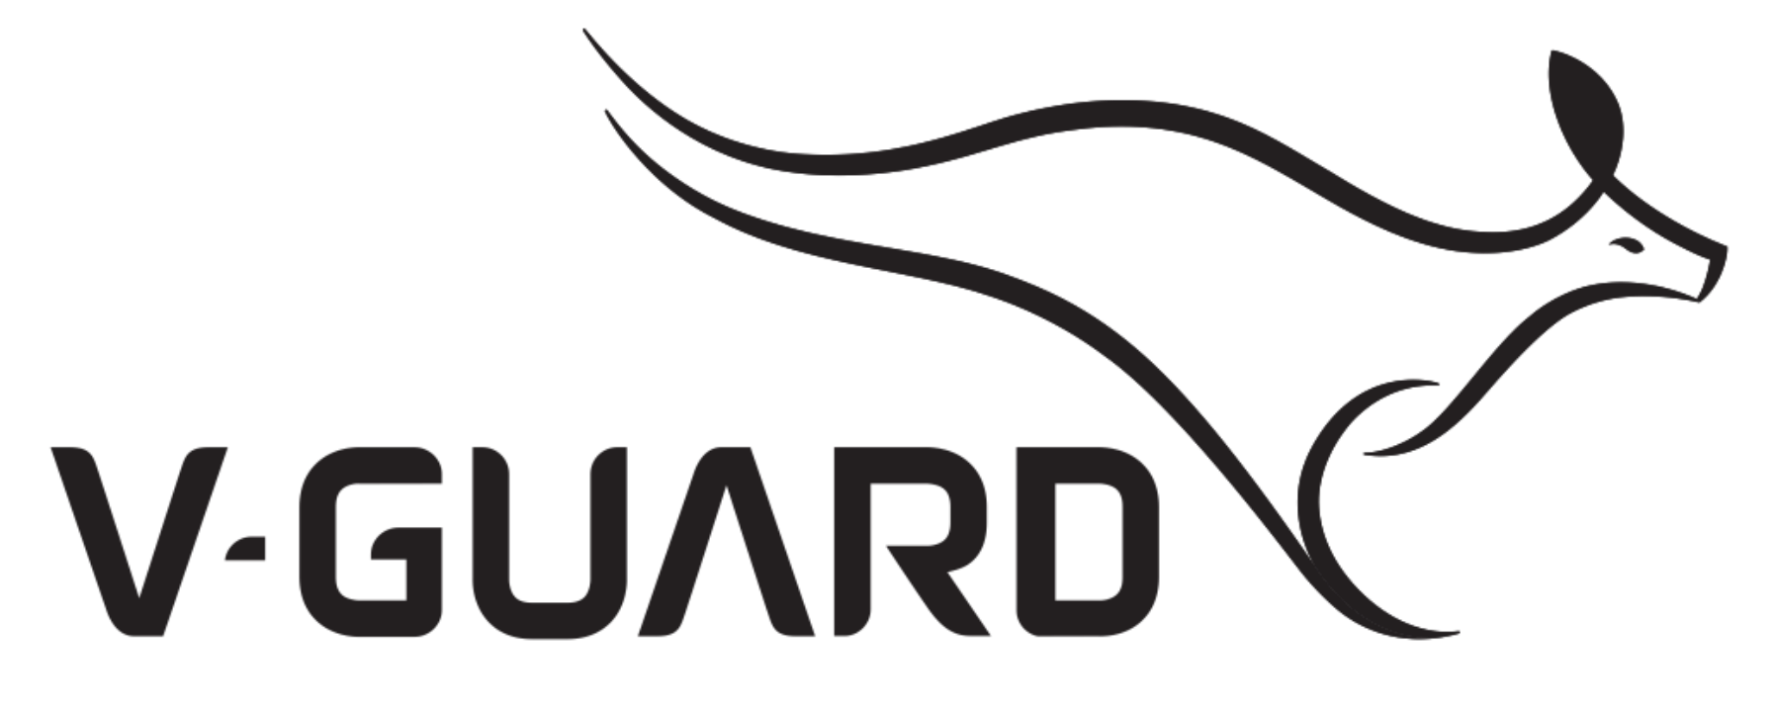 V-GUARD logo